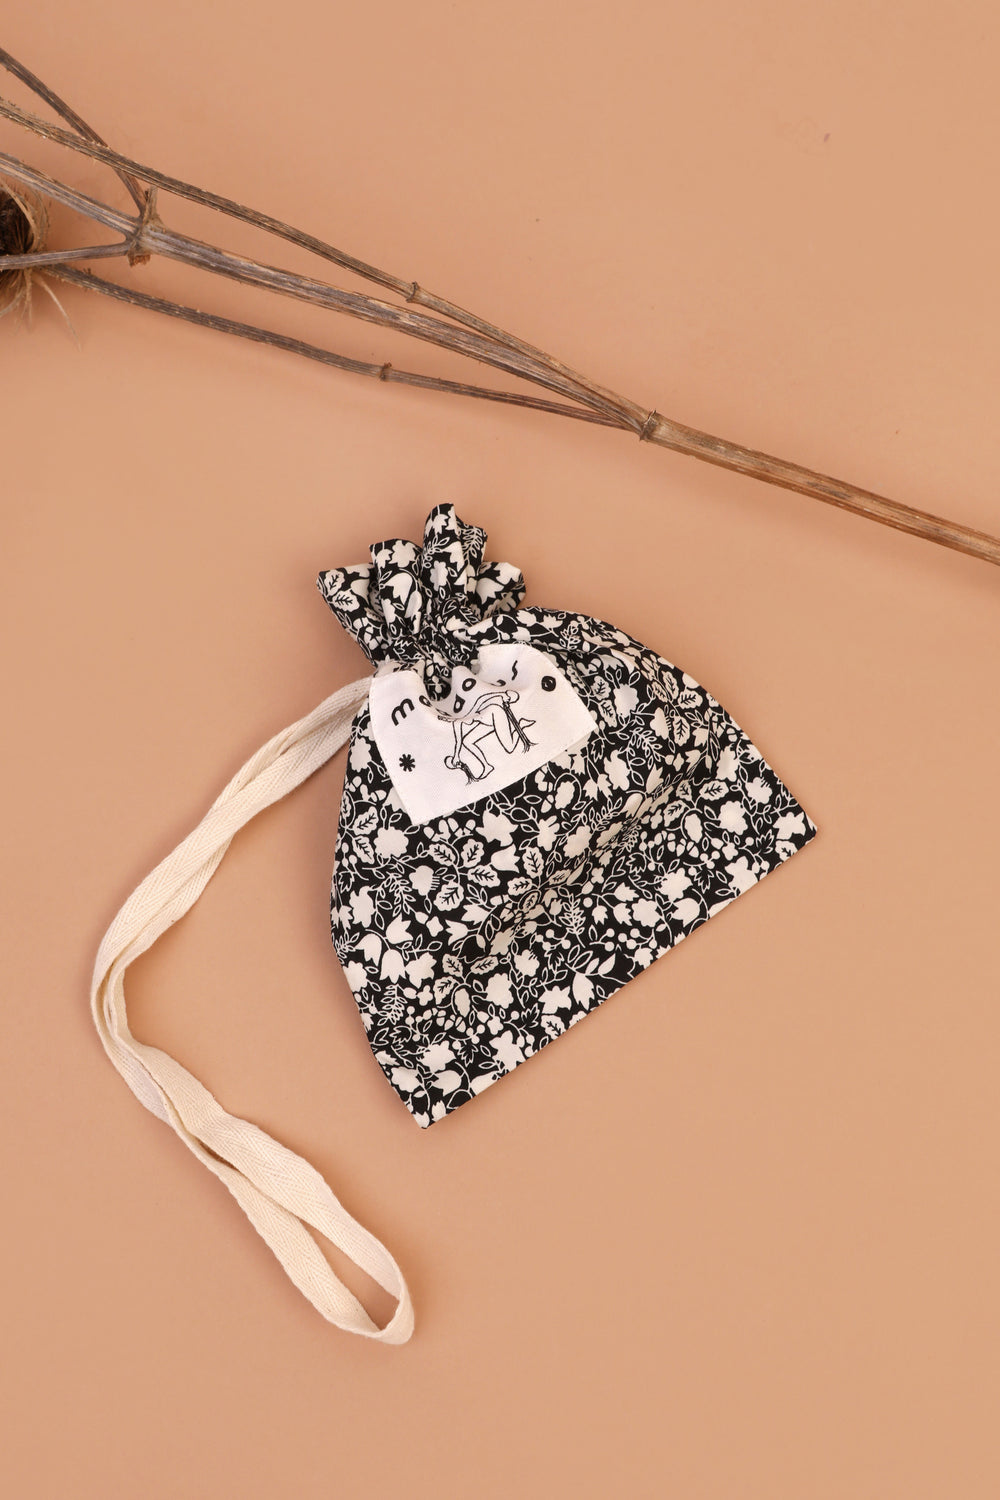 Small Drawstring Bag Black White Floral